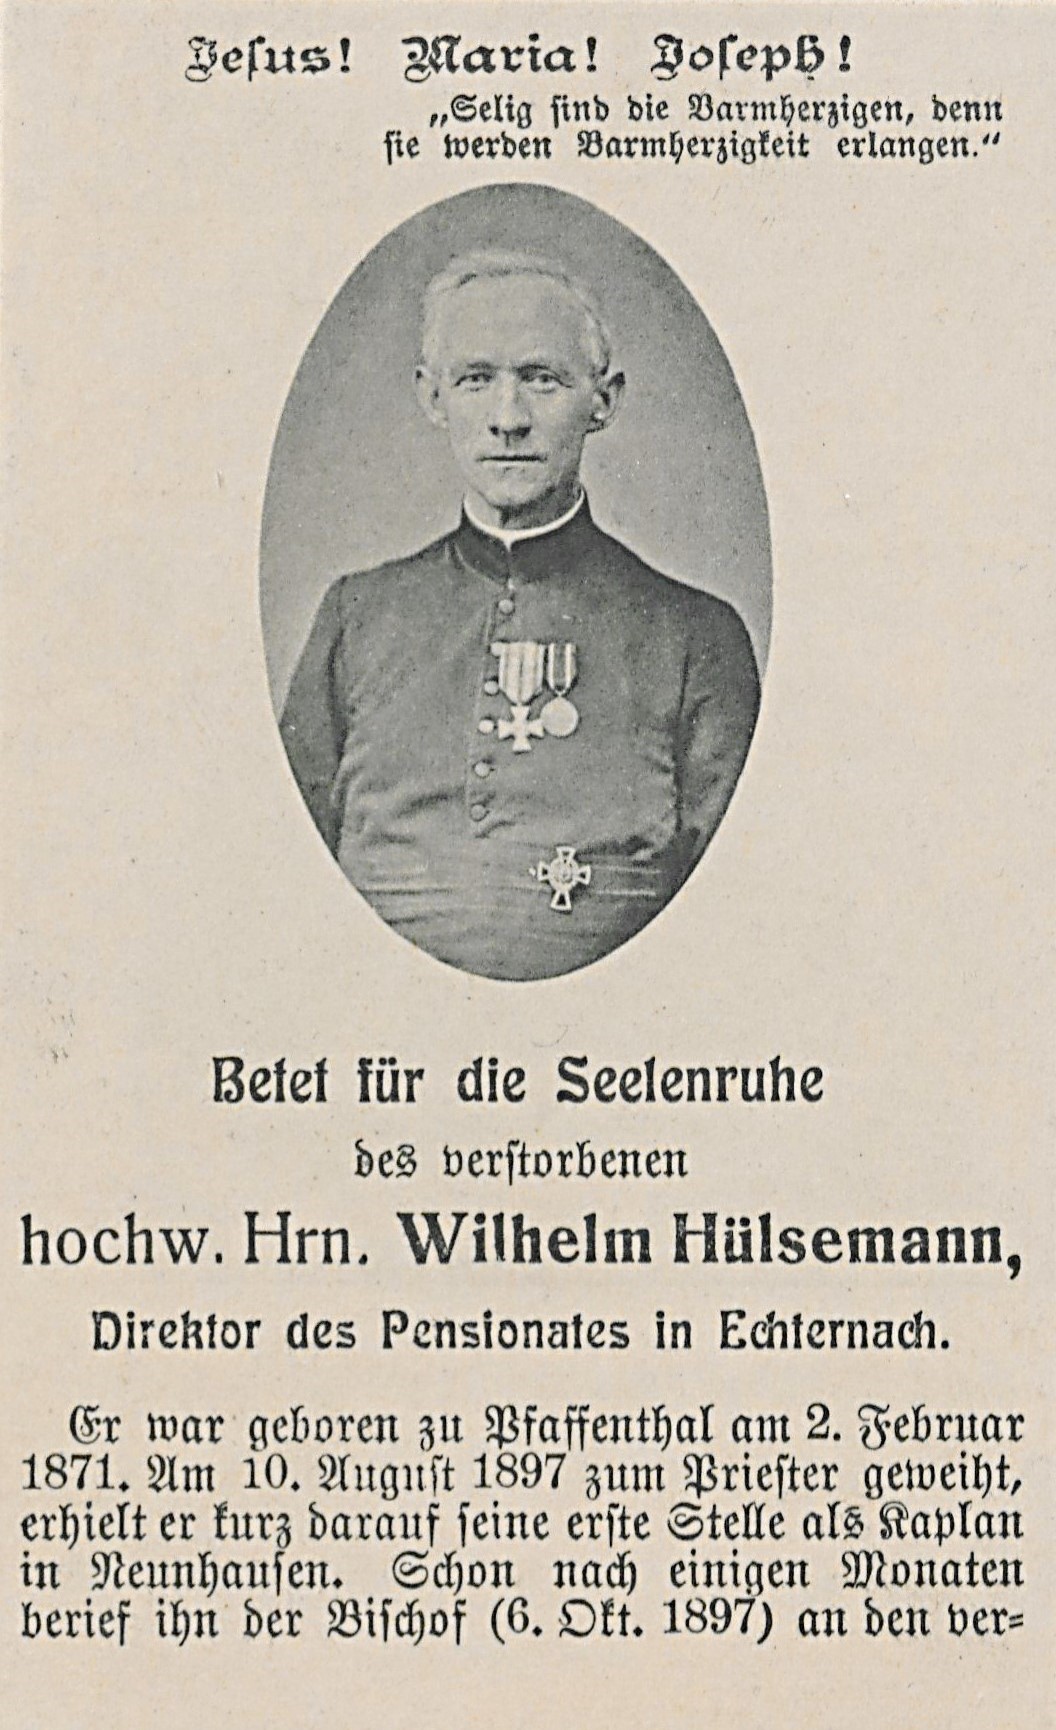 
					
						Totenzettel Wilhelm Hülsemann
					
					
					© Diözesanarchiv Luxemburg, Bestand GV.Memorabilia, GV.Memo 120
					